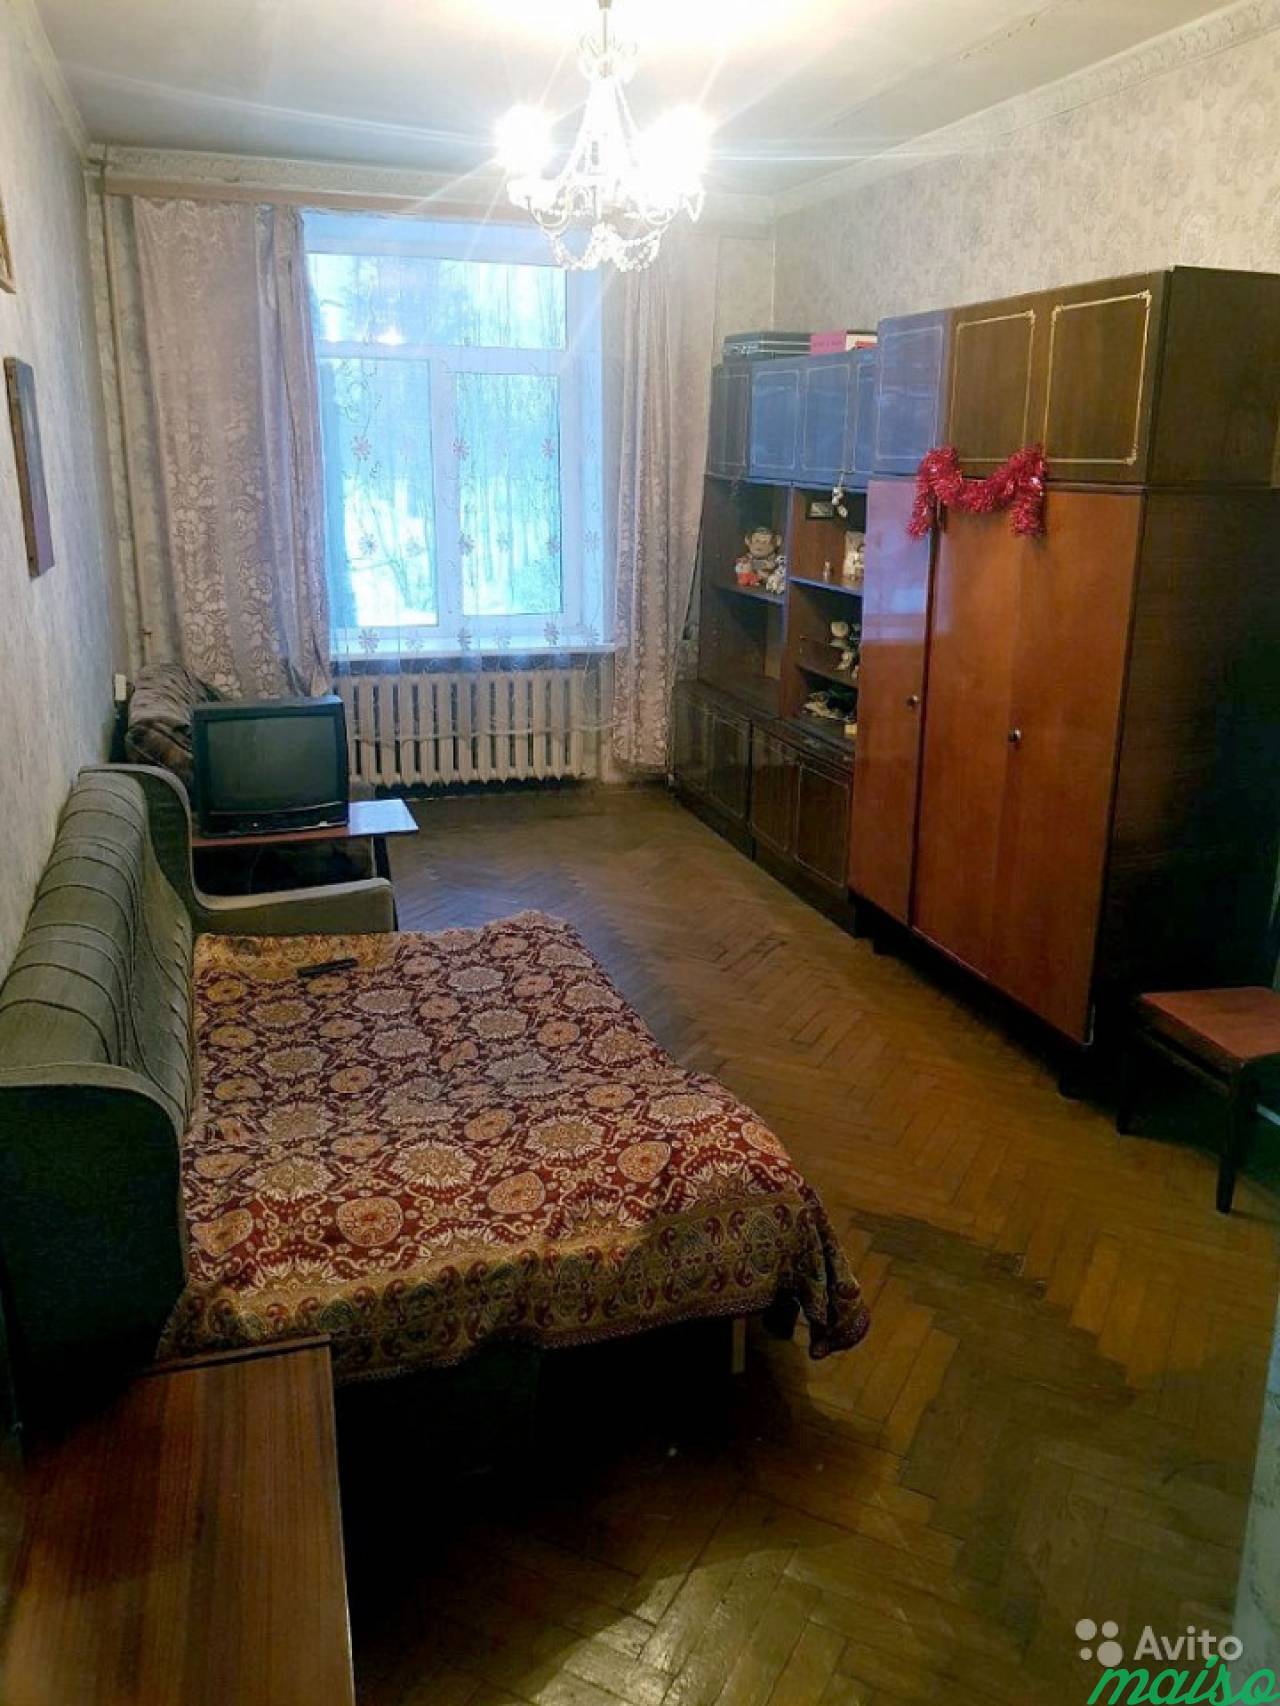 Комната 20 м² в 3-к, 1/5 эт. в Санкт-Петербурге. Фото 1